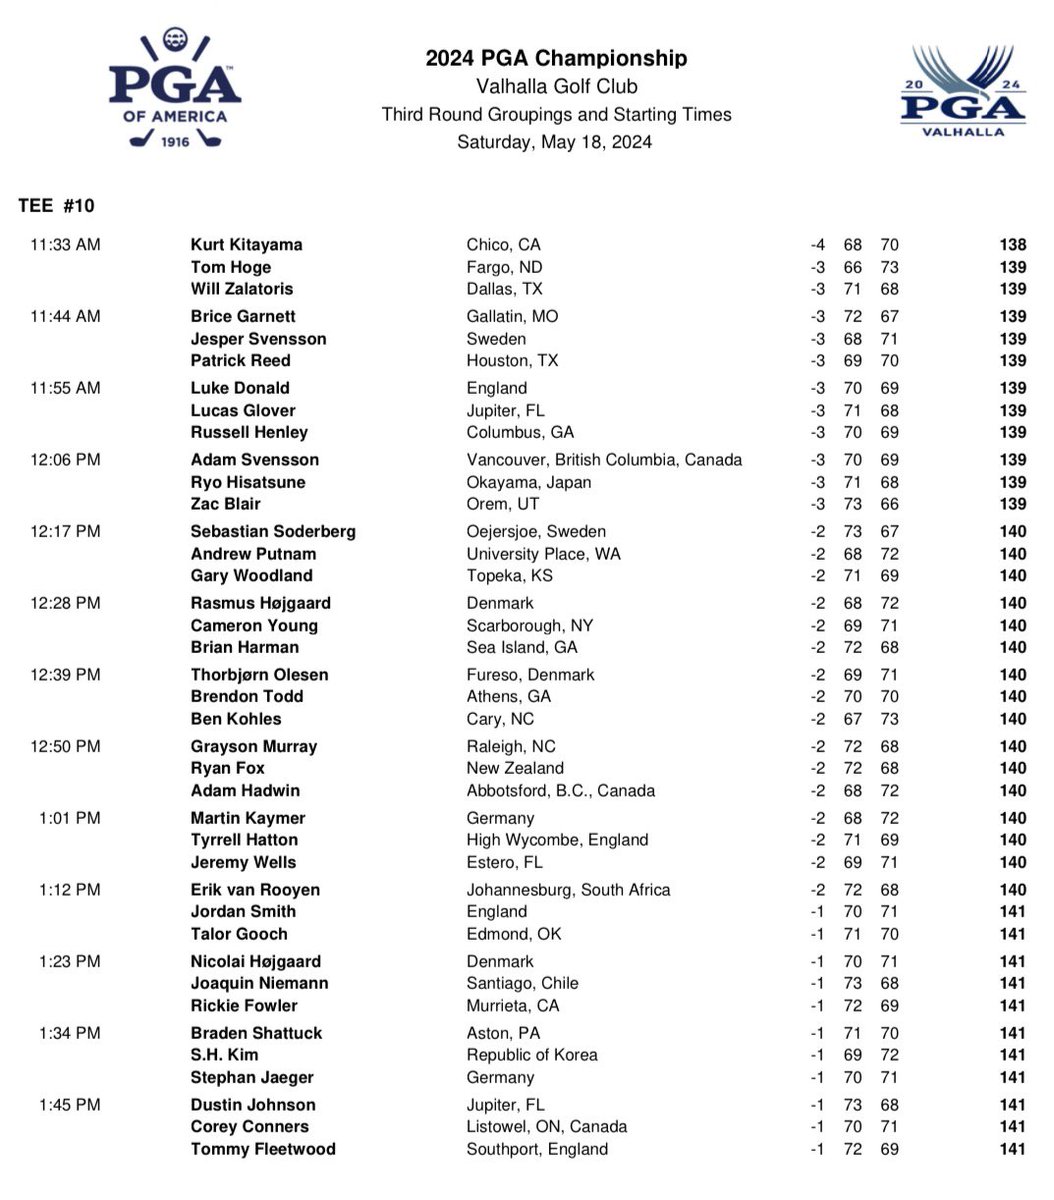 Updated 3rd Round tee times @PGAChampionship